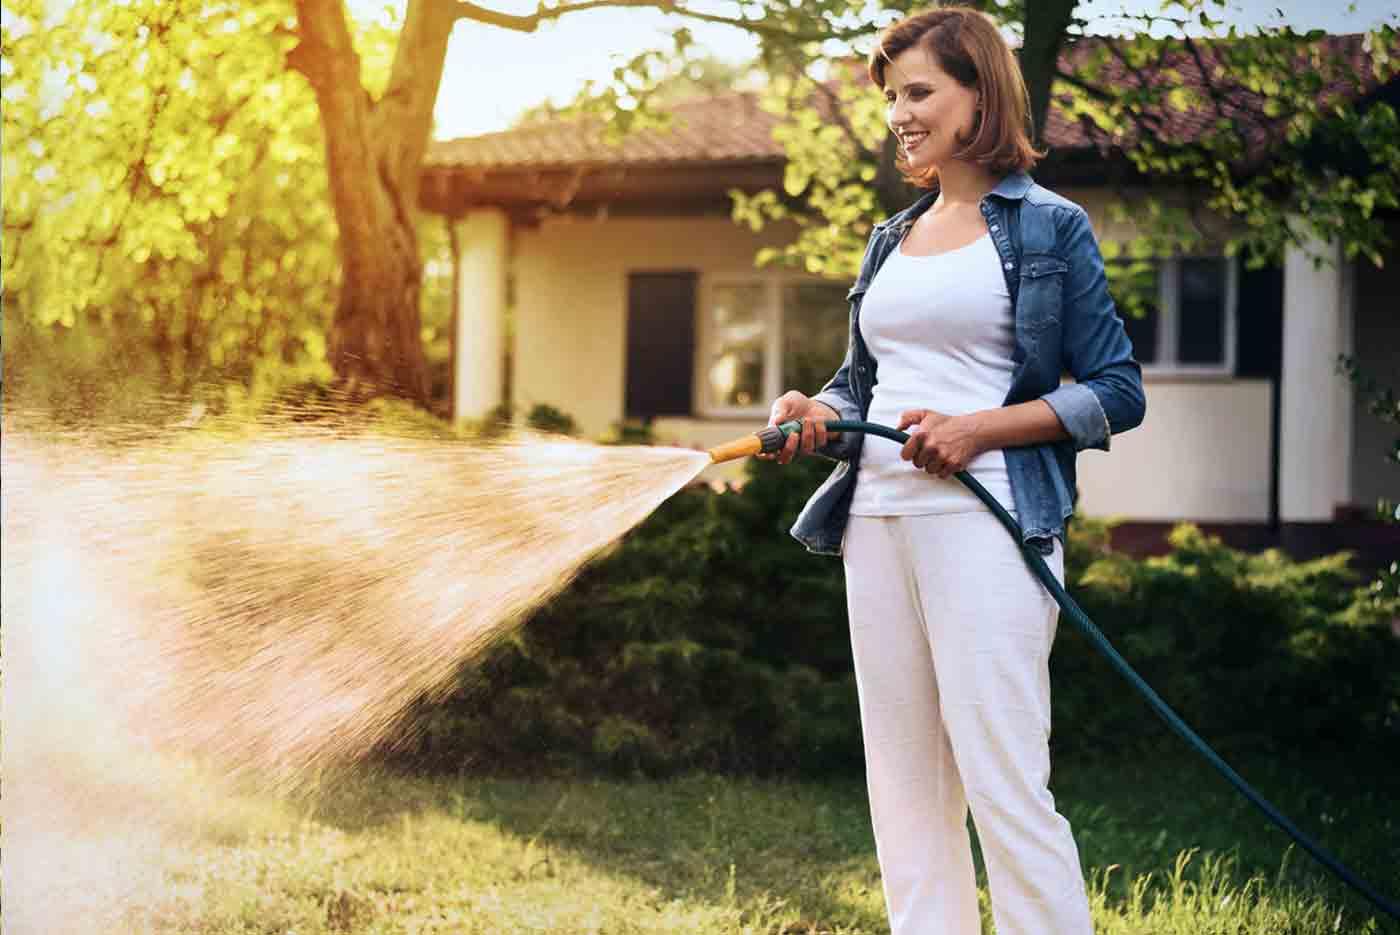 Woman watering her backyard